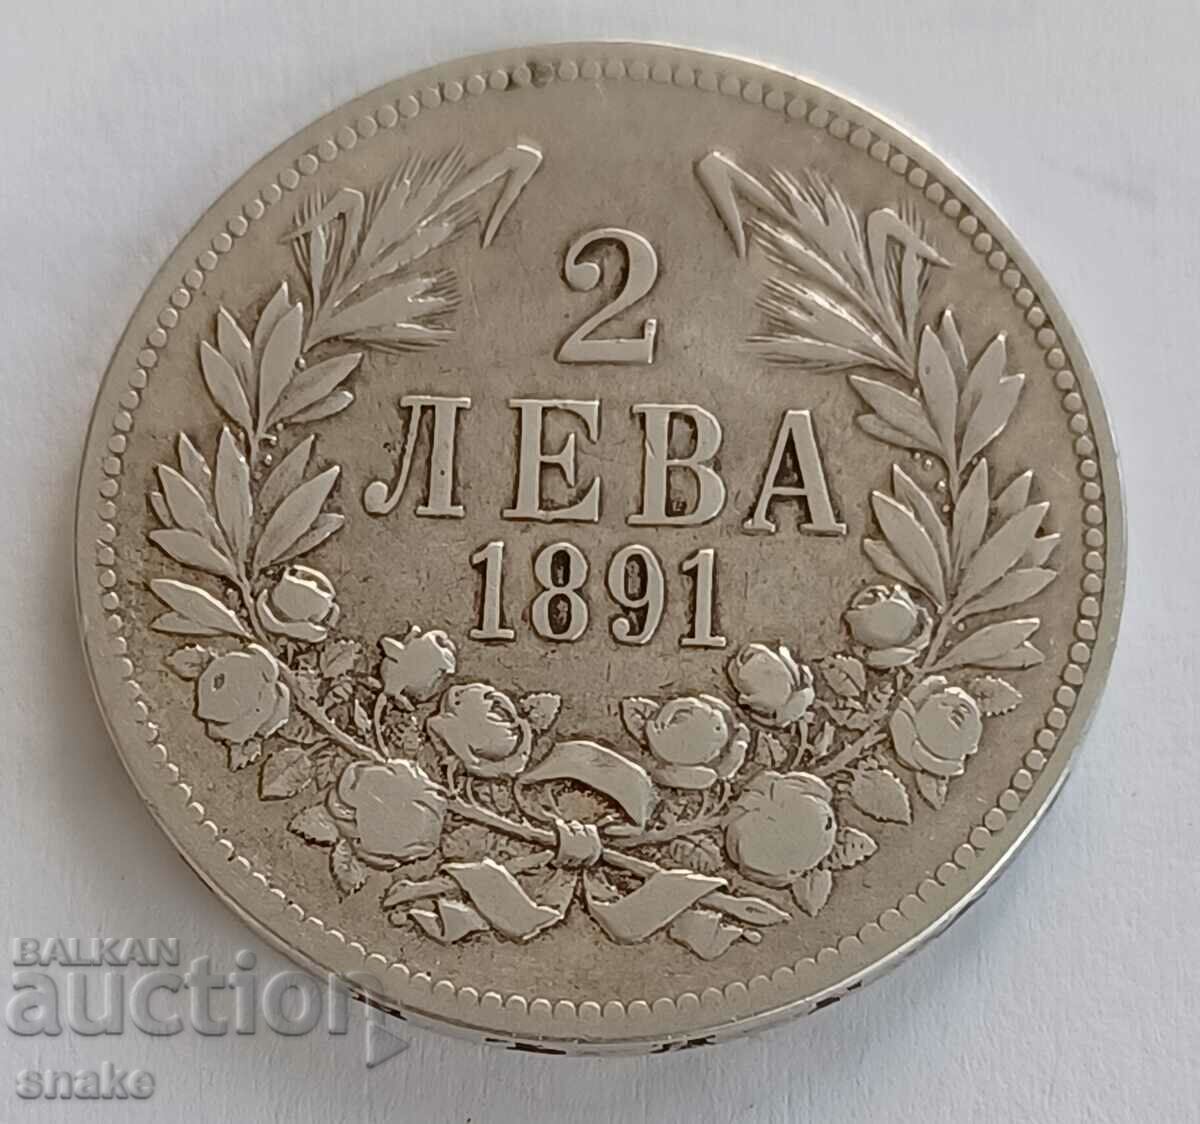 Bulgaria 2 leva 1891 Silver